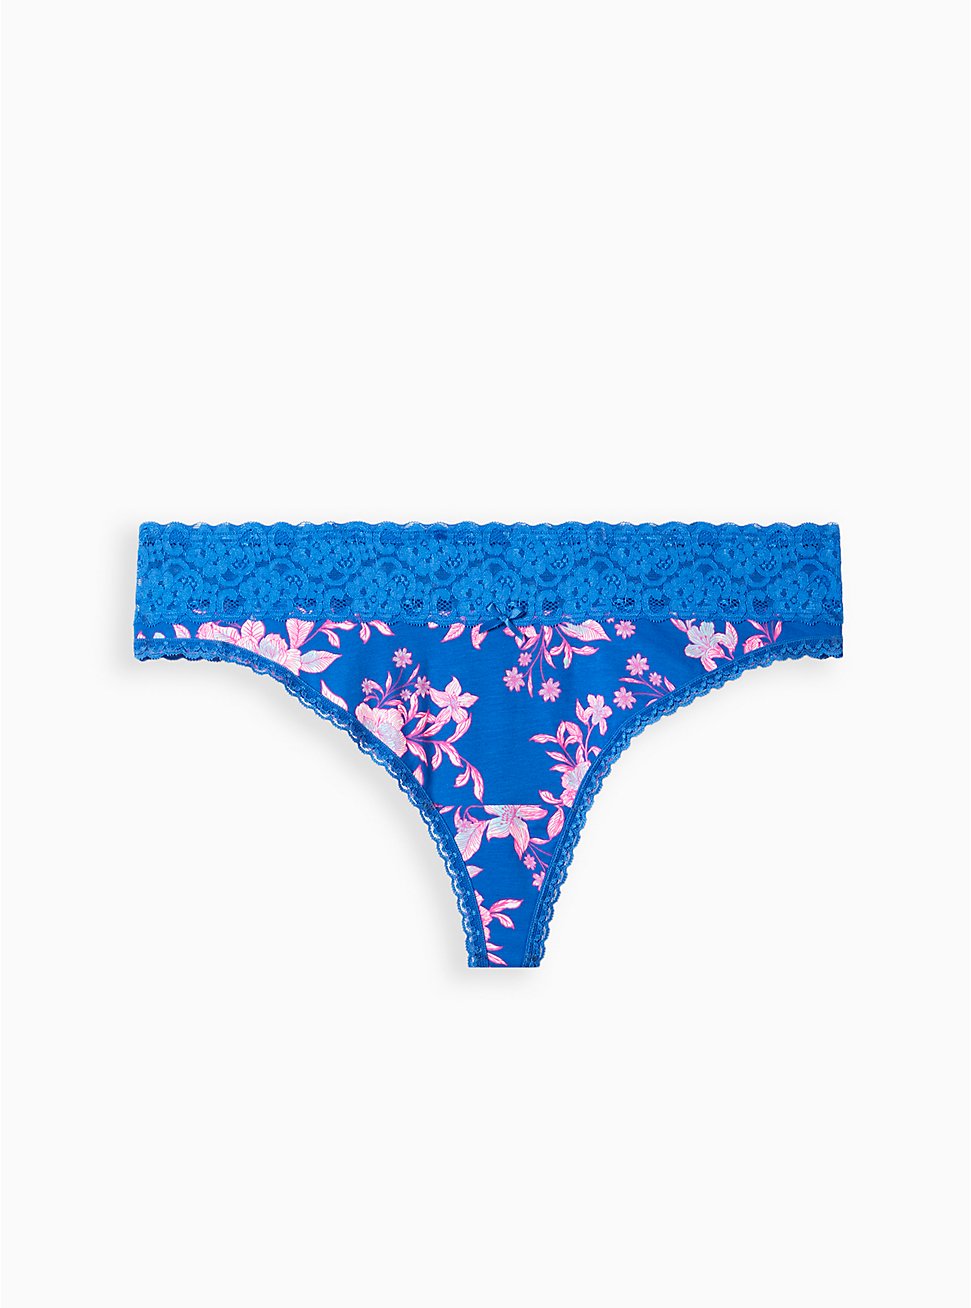 4X BLUE Victoria's Secret Panties The Thong Underwear Bottom NEW Size M 